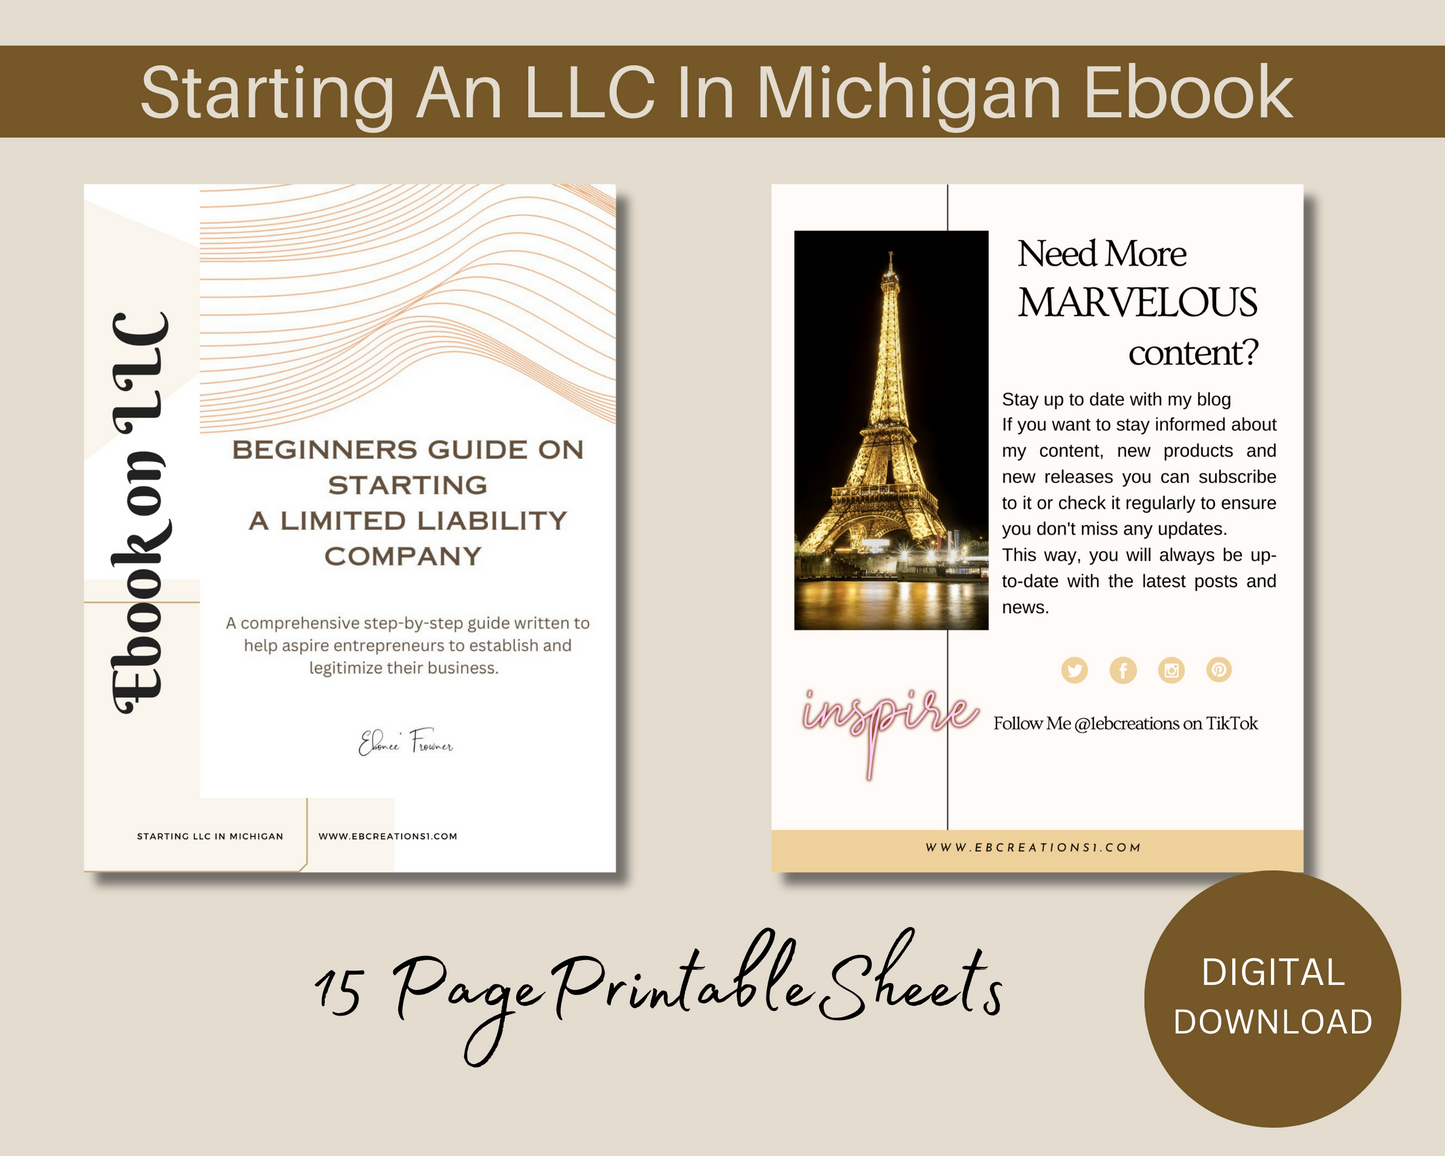 Starting An LLC In Michigan Ebook | Digital Download